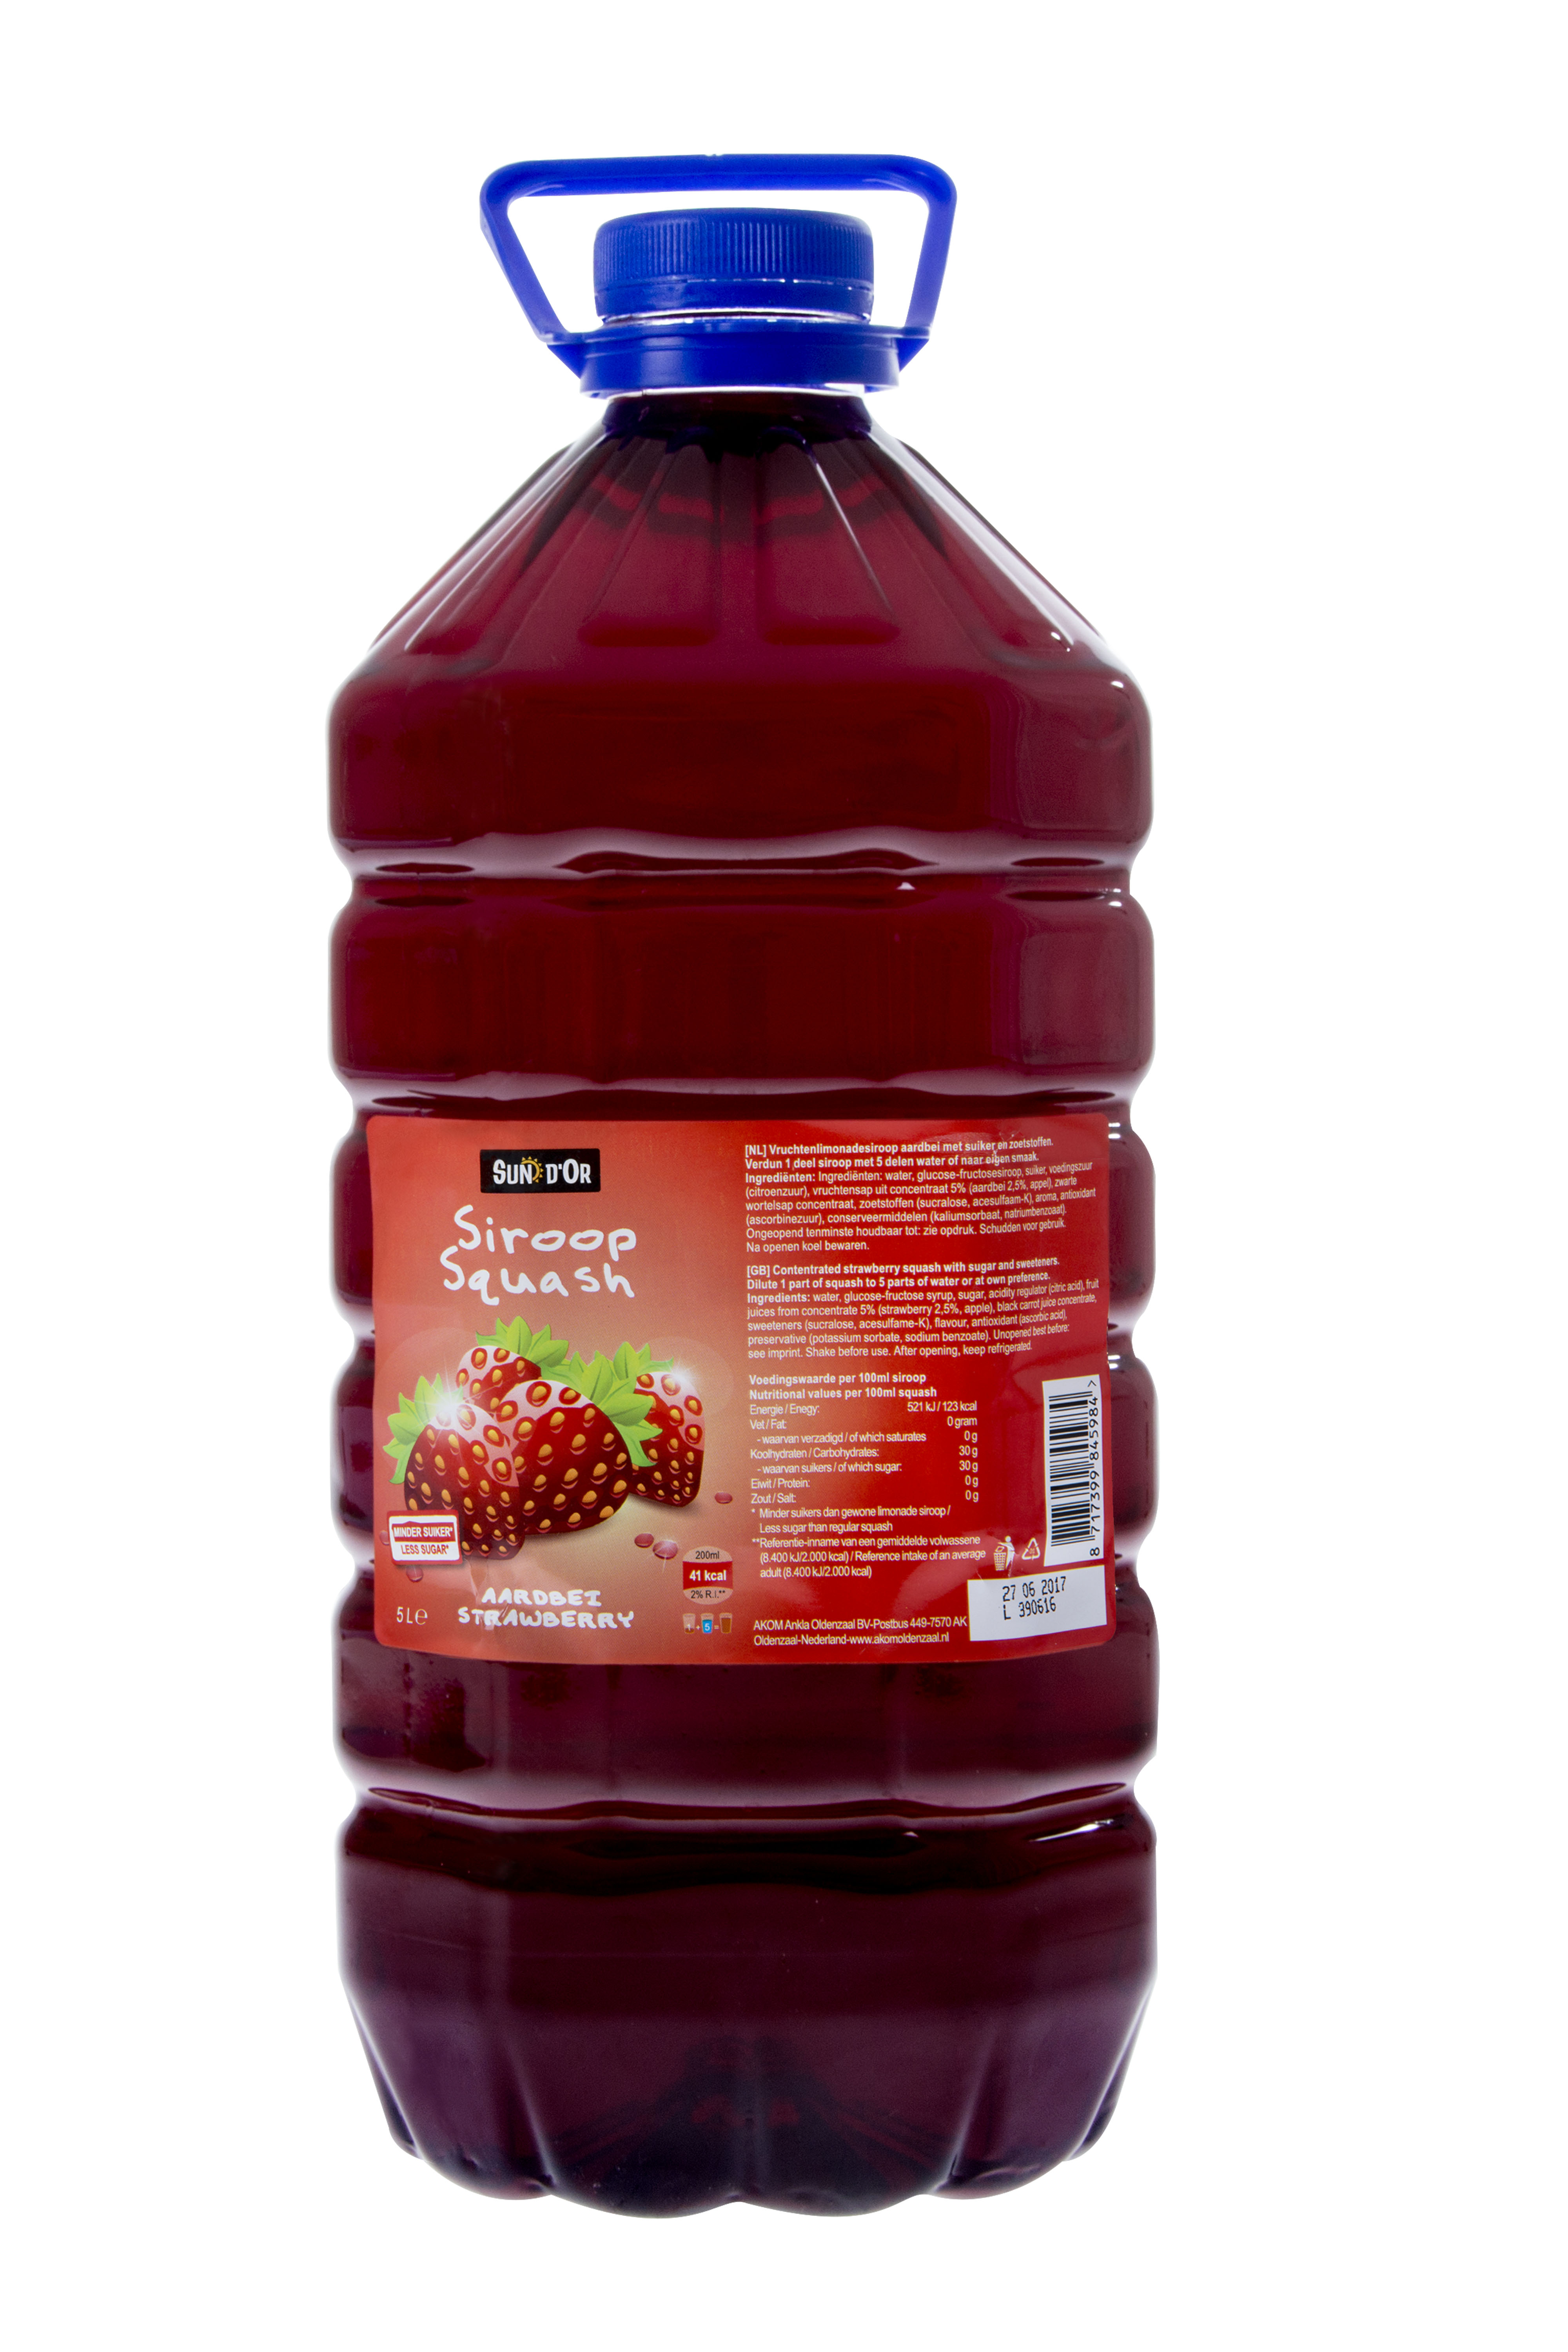 Sun d'Or Strawberry Fruit Squash 5 liter 